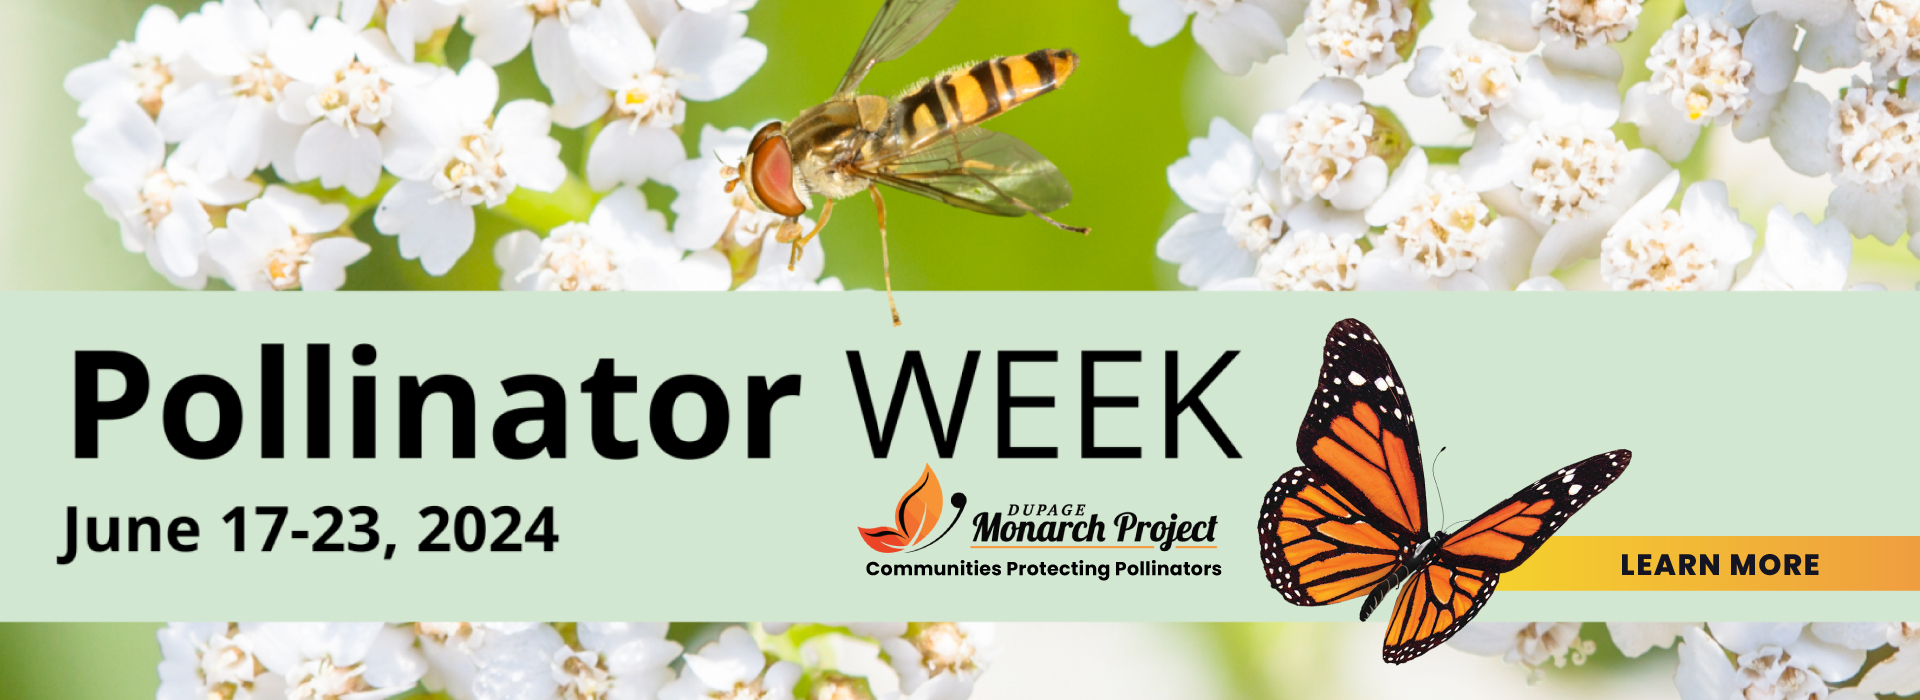 DuPage Monarchs Pollinator Week